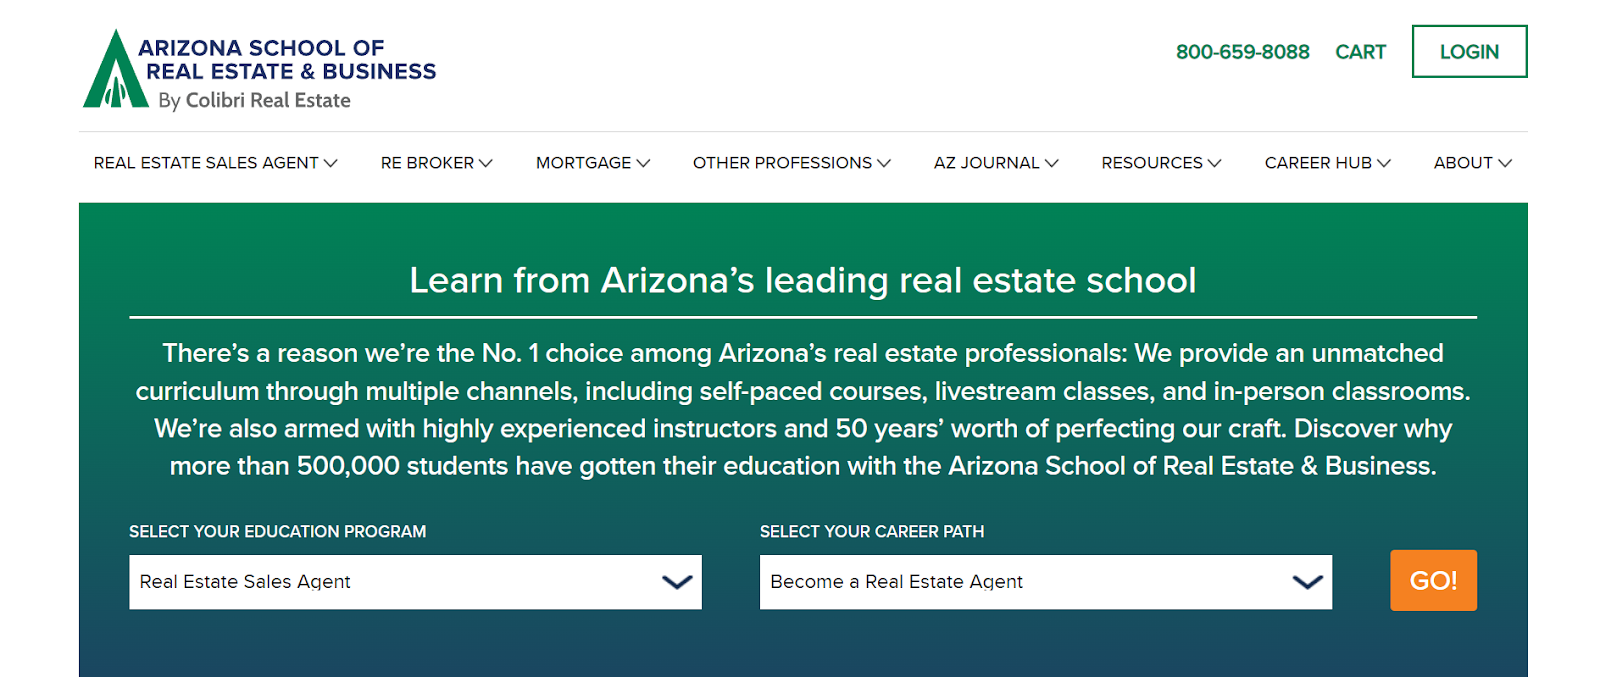 Arizona School of Real Estate Business